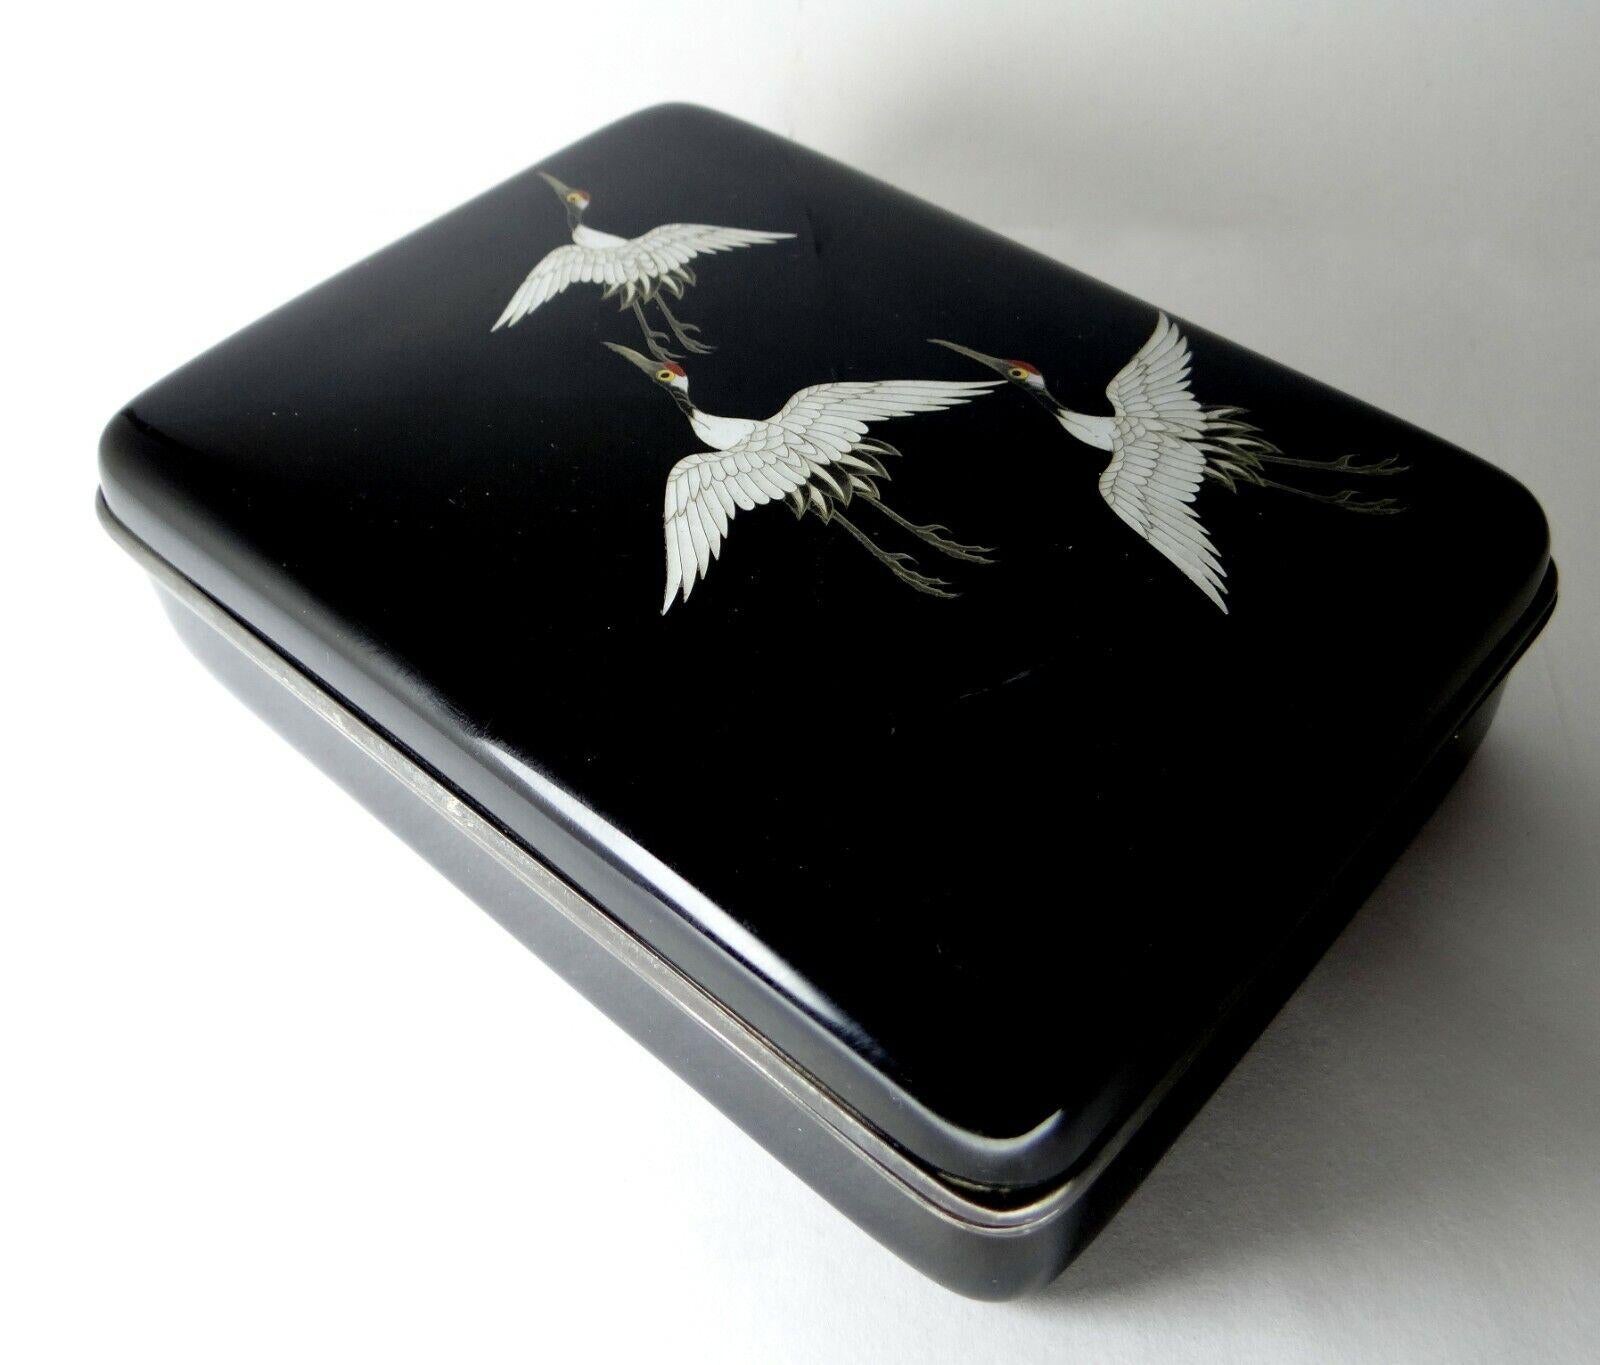 Gorgeous Japanese Silver Enamel Cloisonné Box. 
Weight: 504 grams
Size: 5.5 x 4 x 1.5 inches